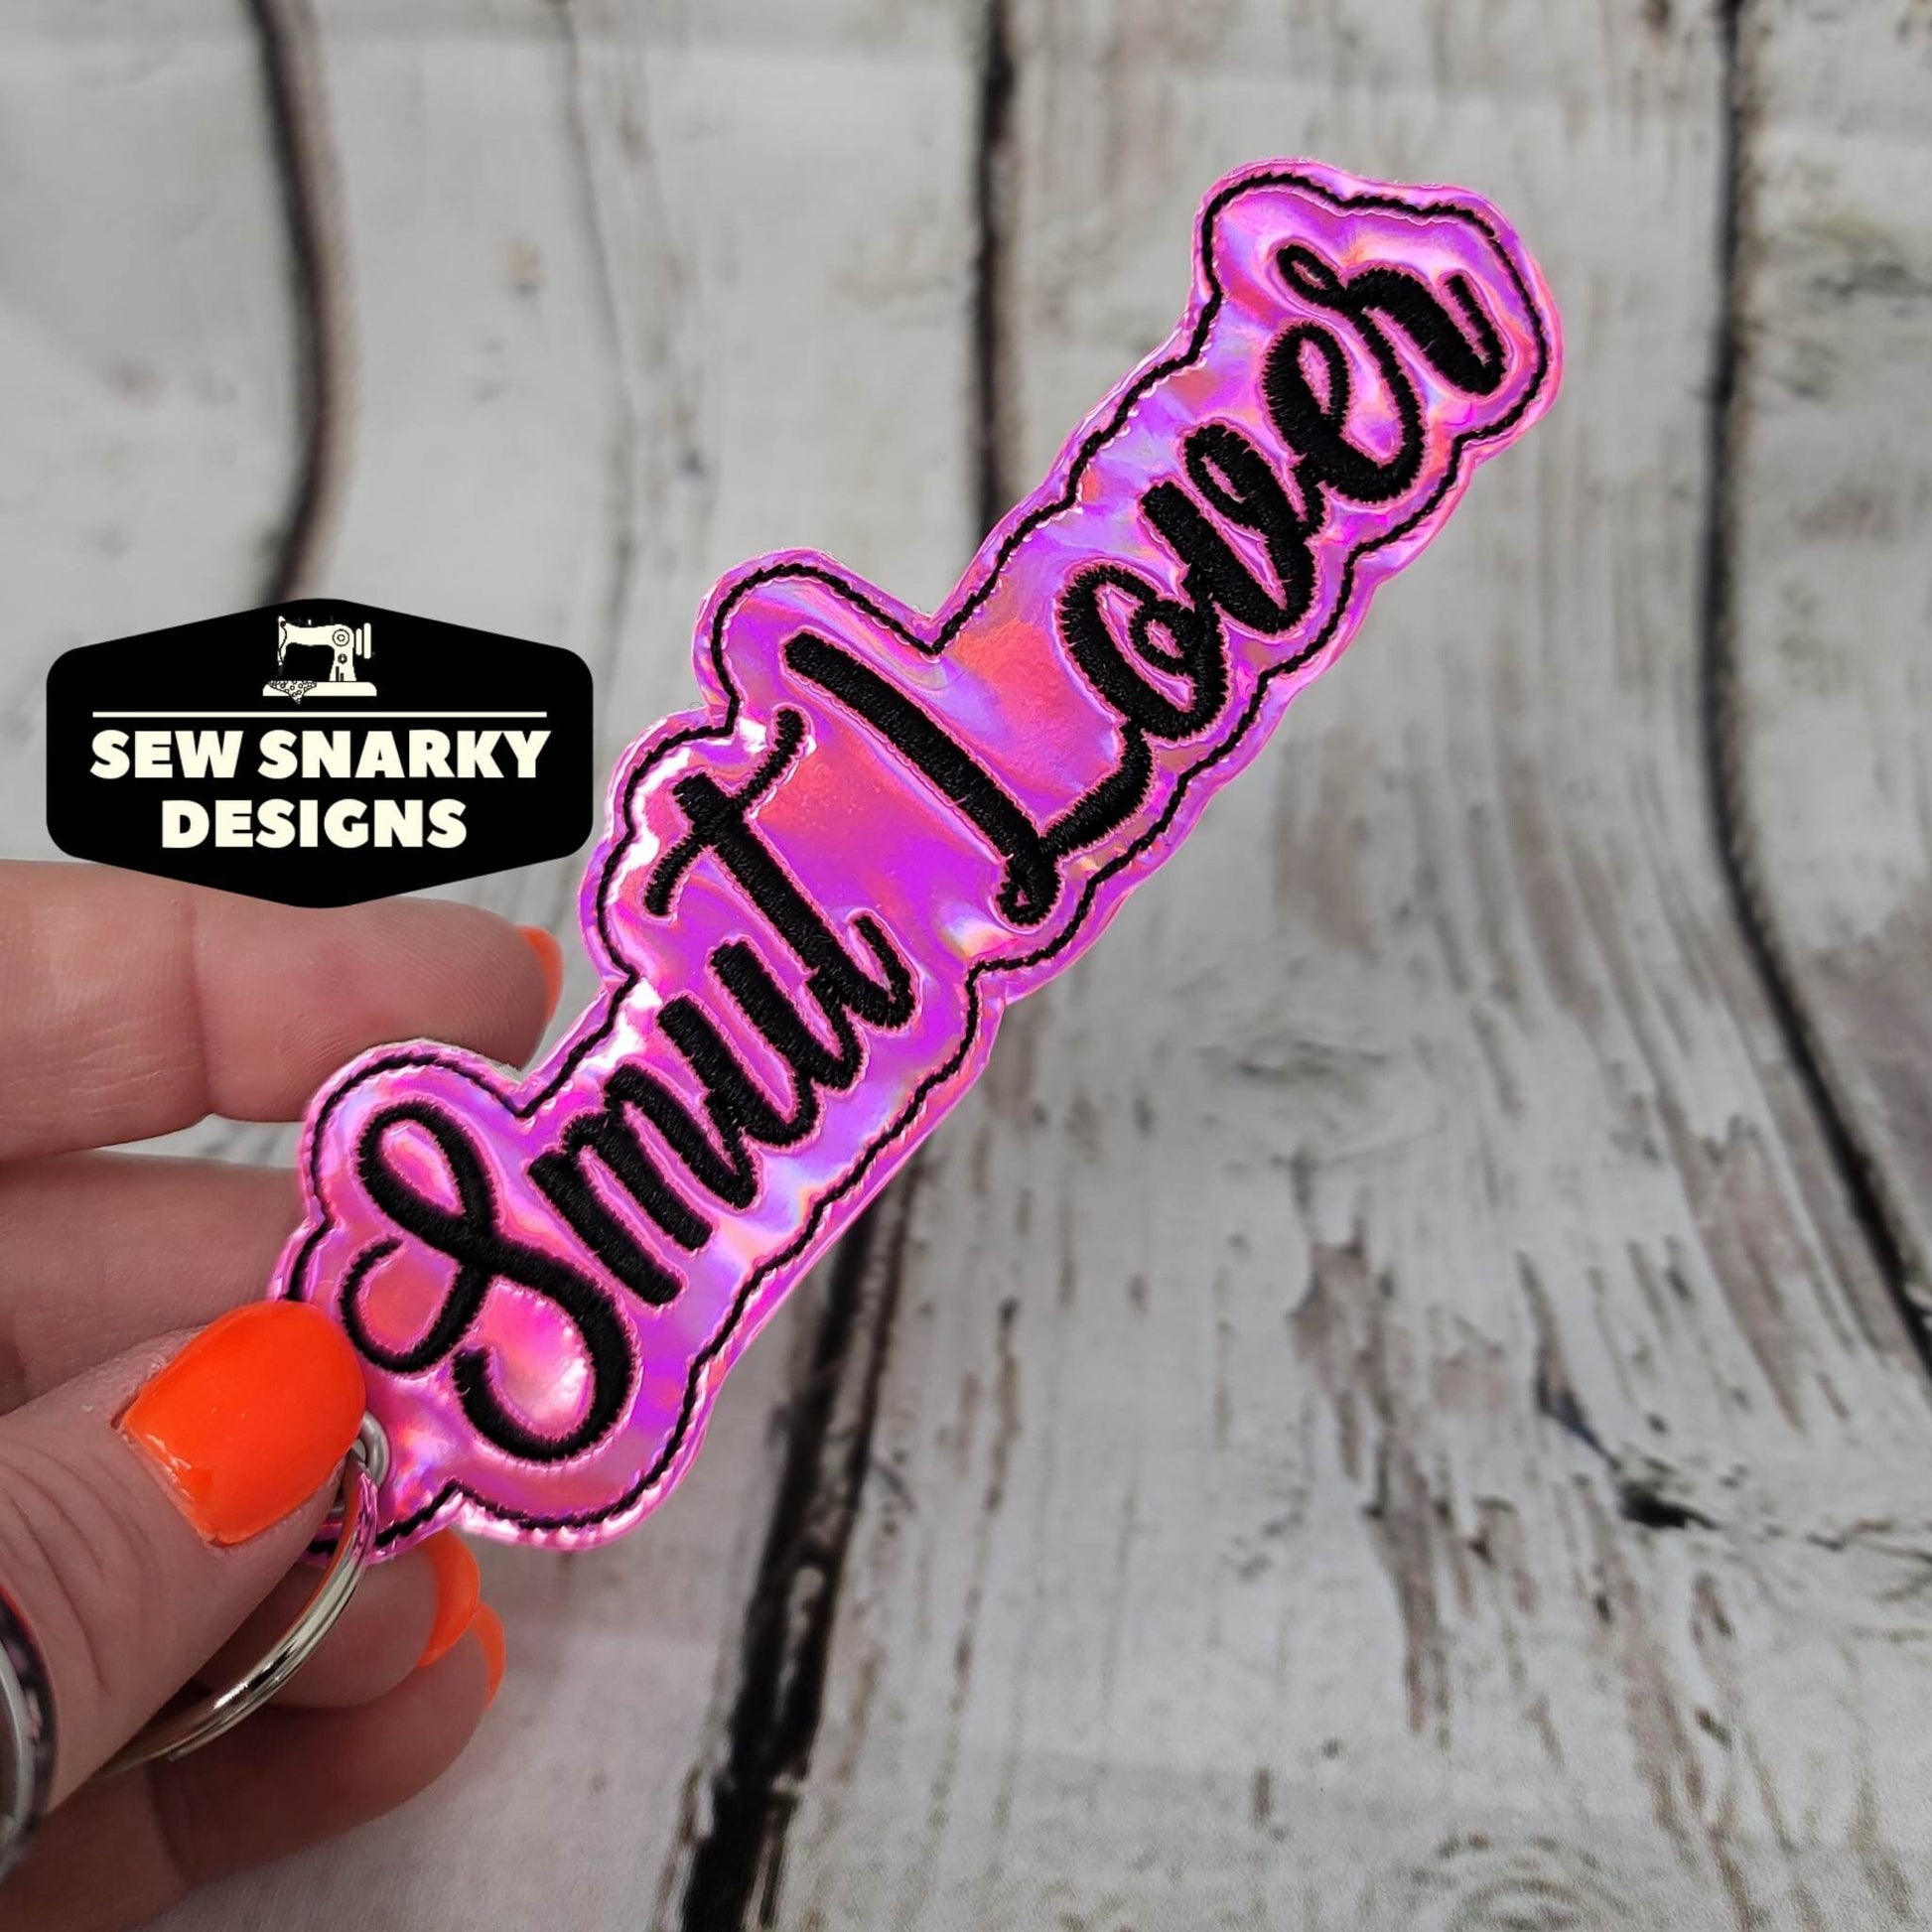 Smut Lover Bookmark, Smut Lover Keychain, Adult Humor, Dark Humor, Adult Books, #booktok